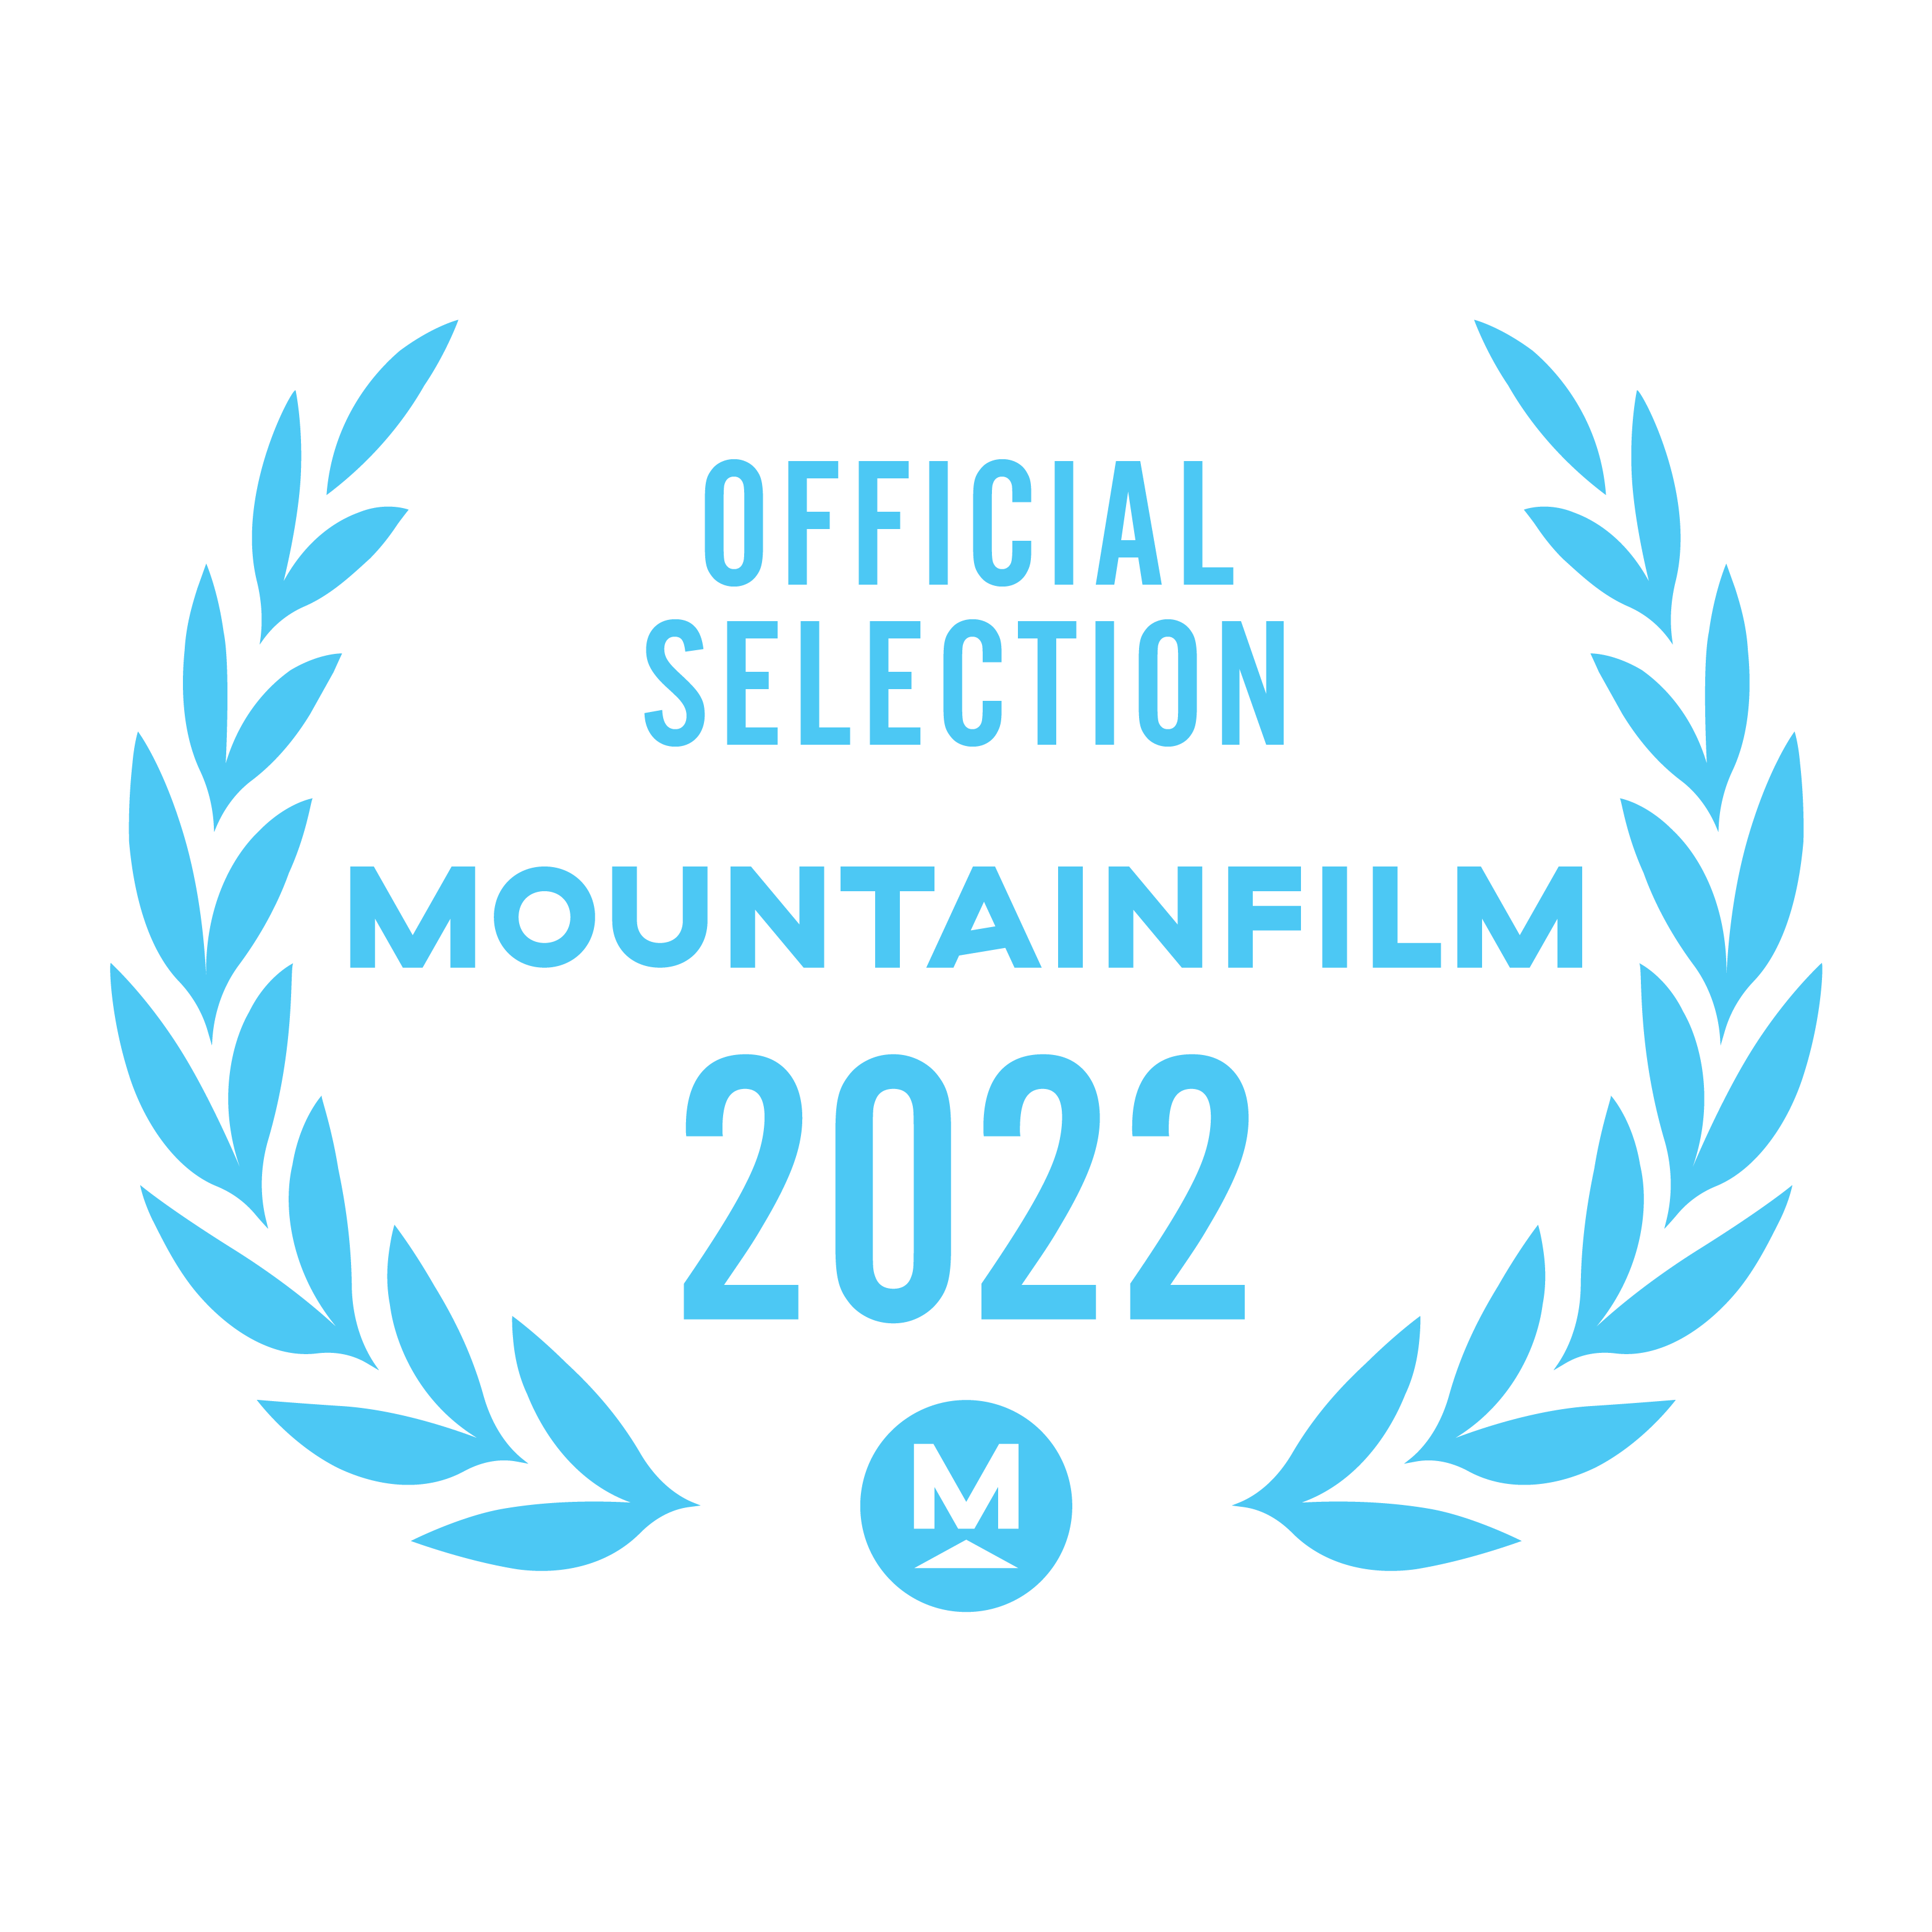 Mountainfilm 2022 - Official Selection